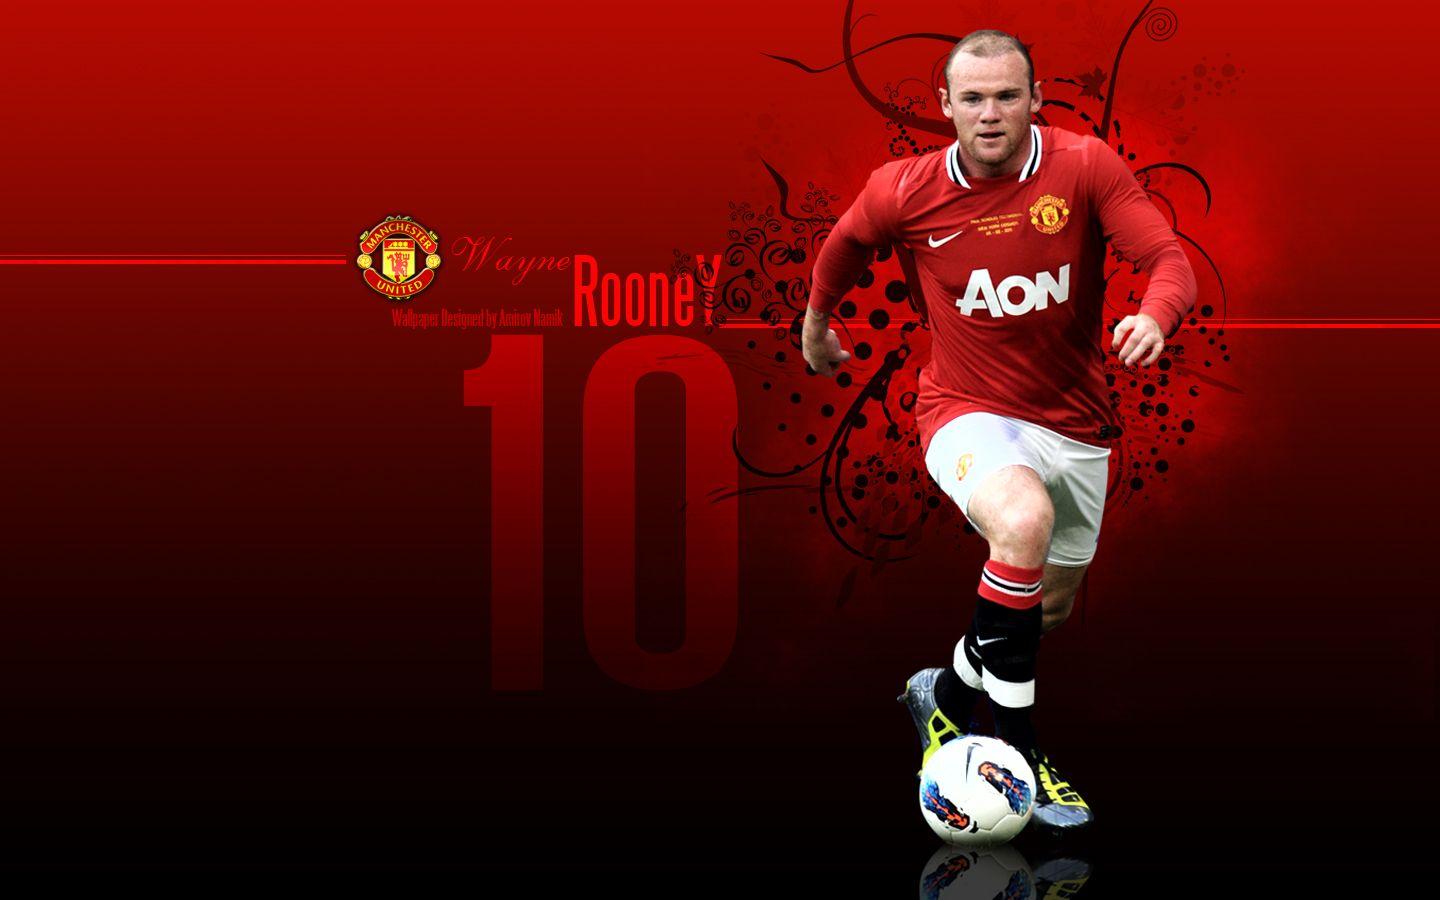 Yne Rooney HD Wallpaper, Background Image